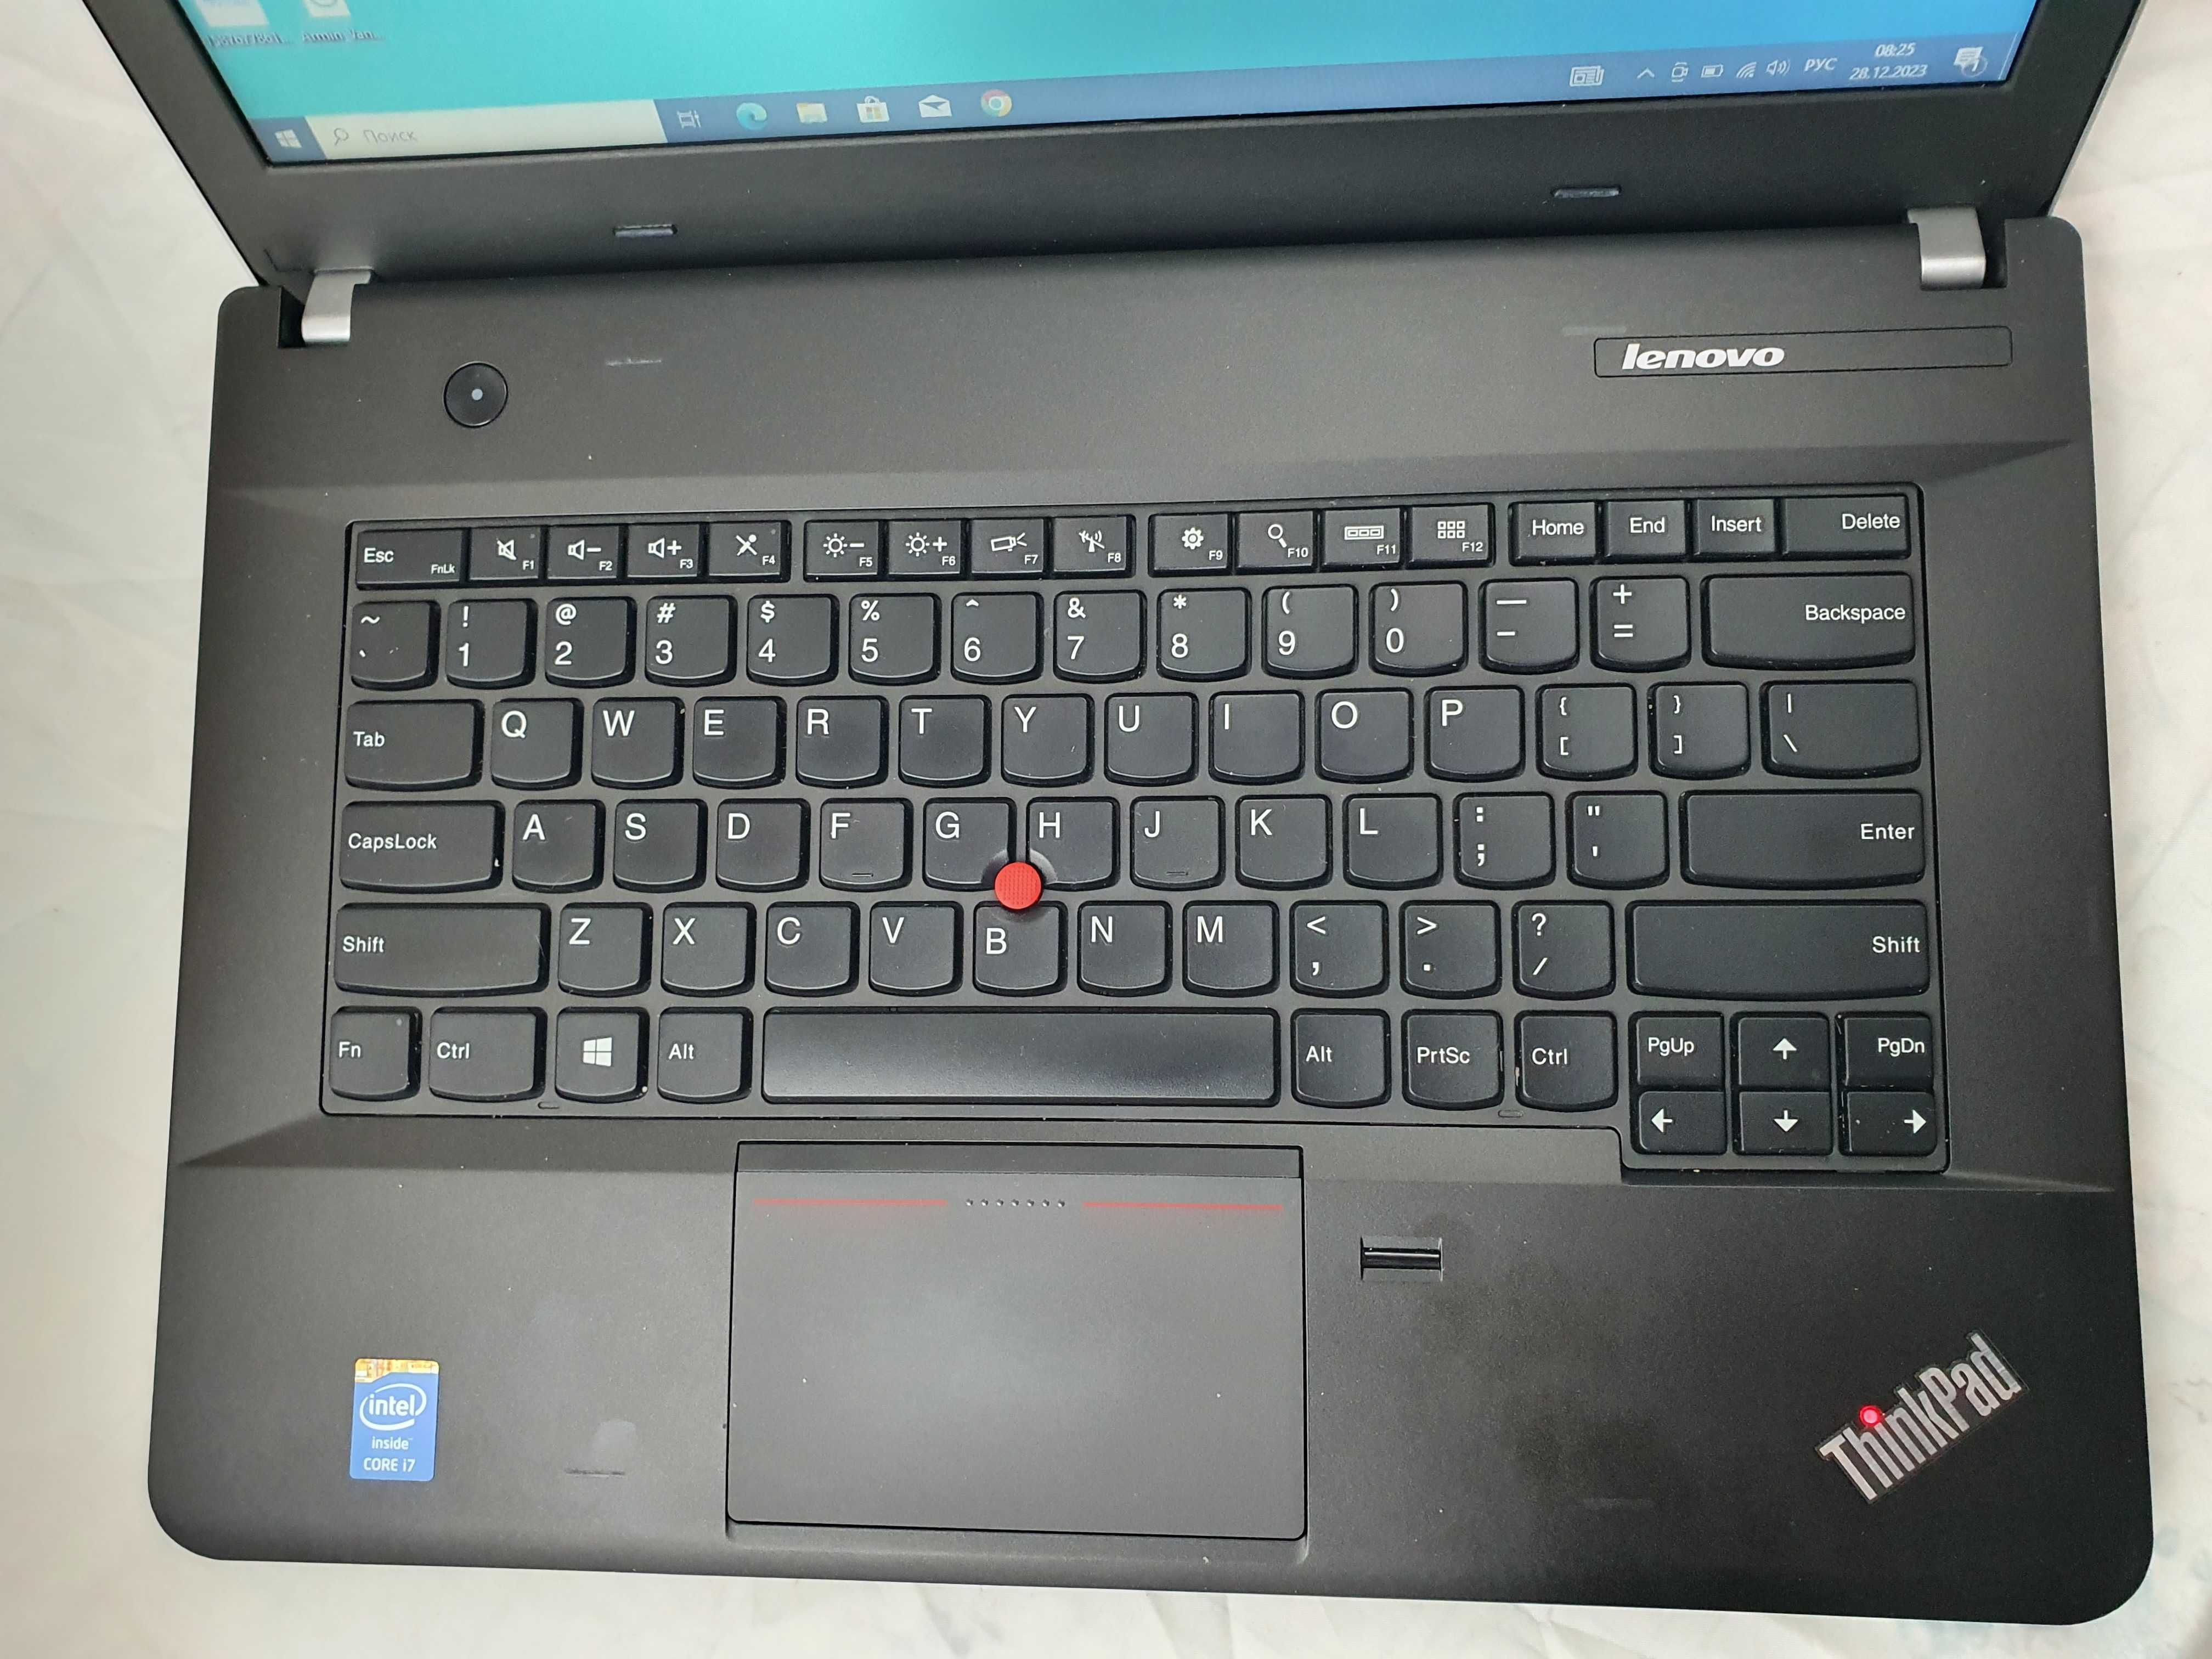 Ноутбук Lenovo ThinkPad E440 i7-4702MQ, 8Gb/128Gb SSD